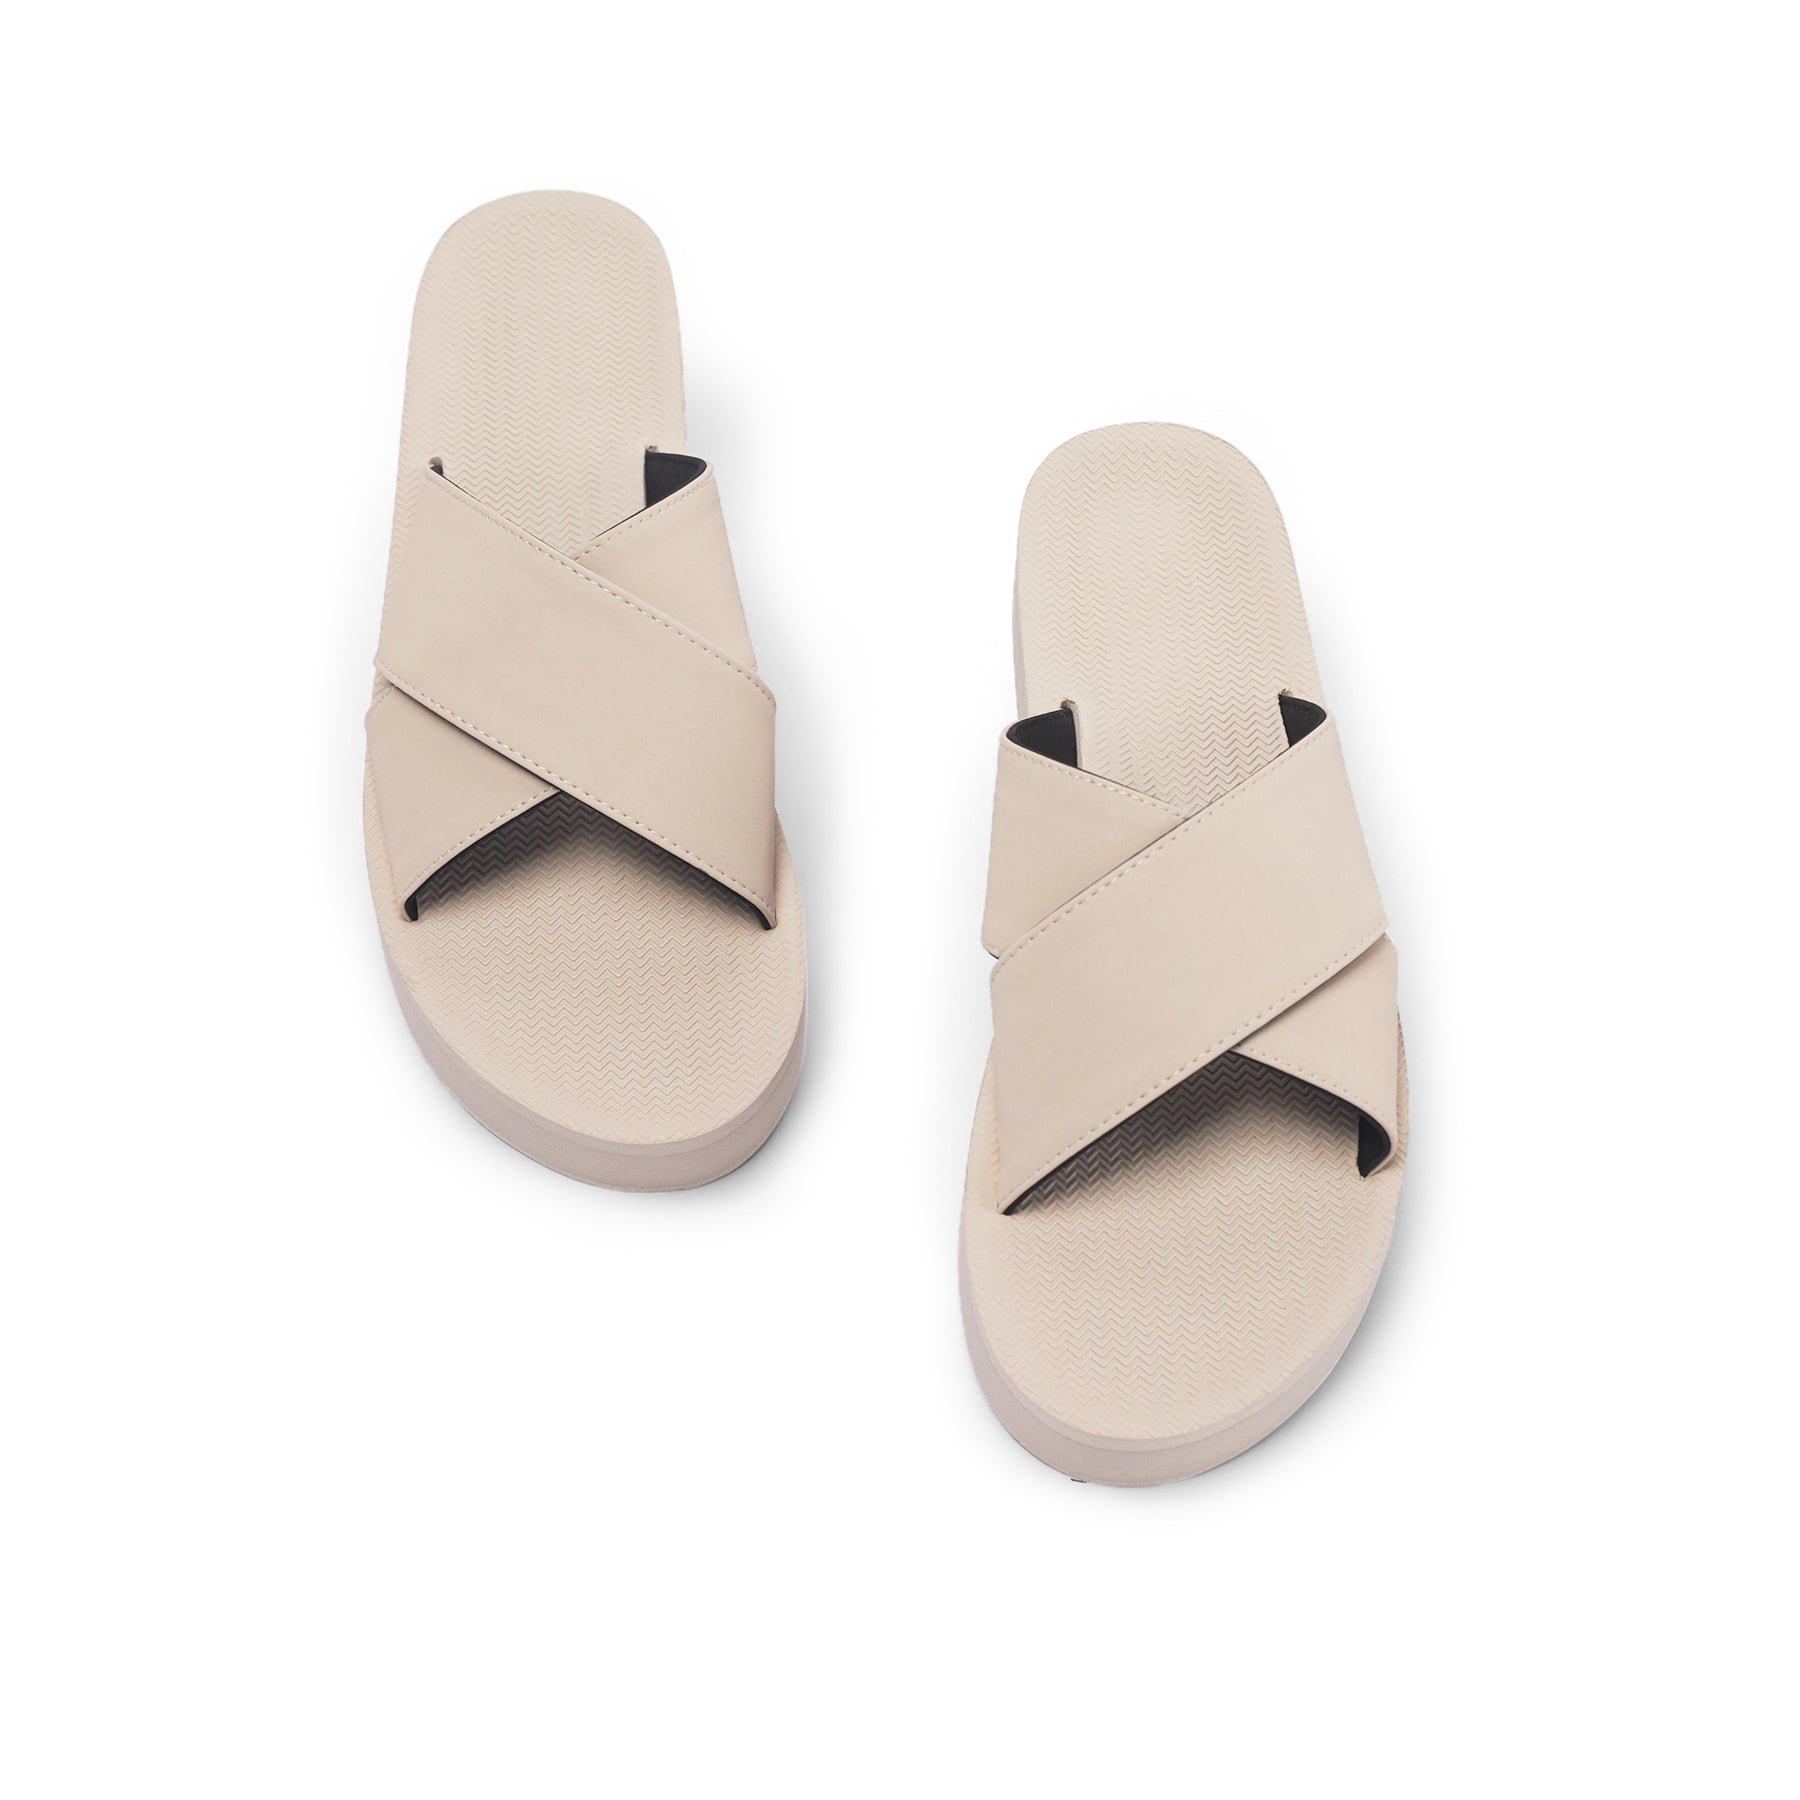 Pair of Sea Salt Sole/Sea Salt Women’s Cross Platform Sandals